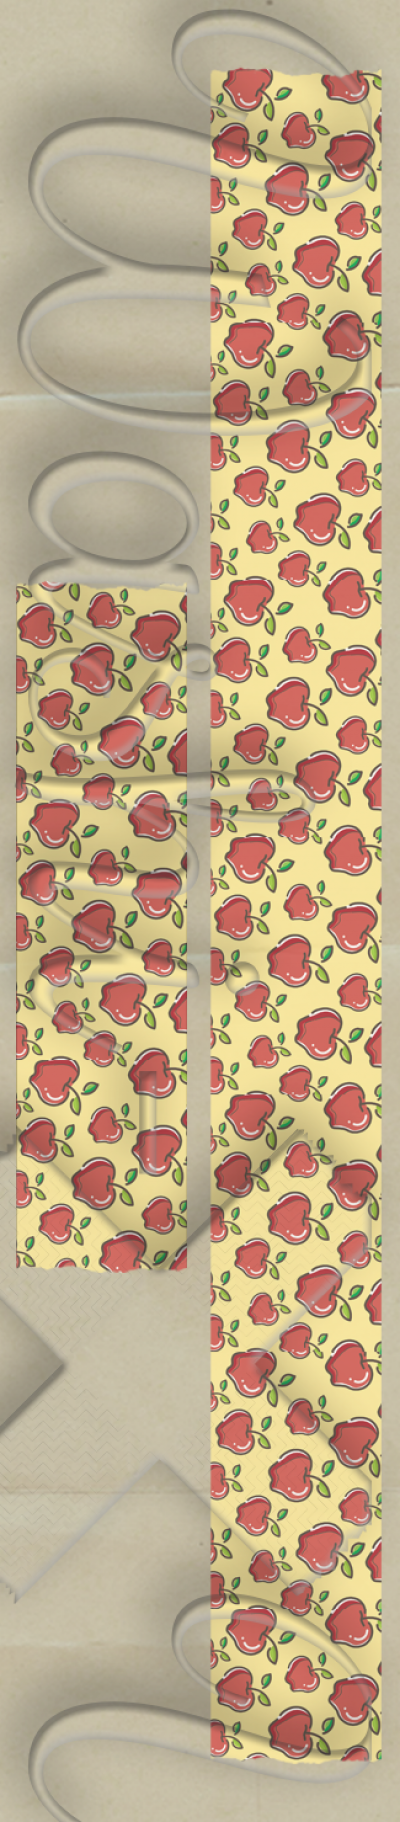 Apples patterned washi tape